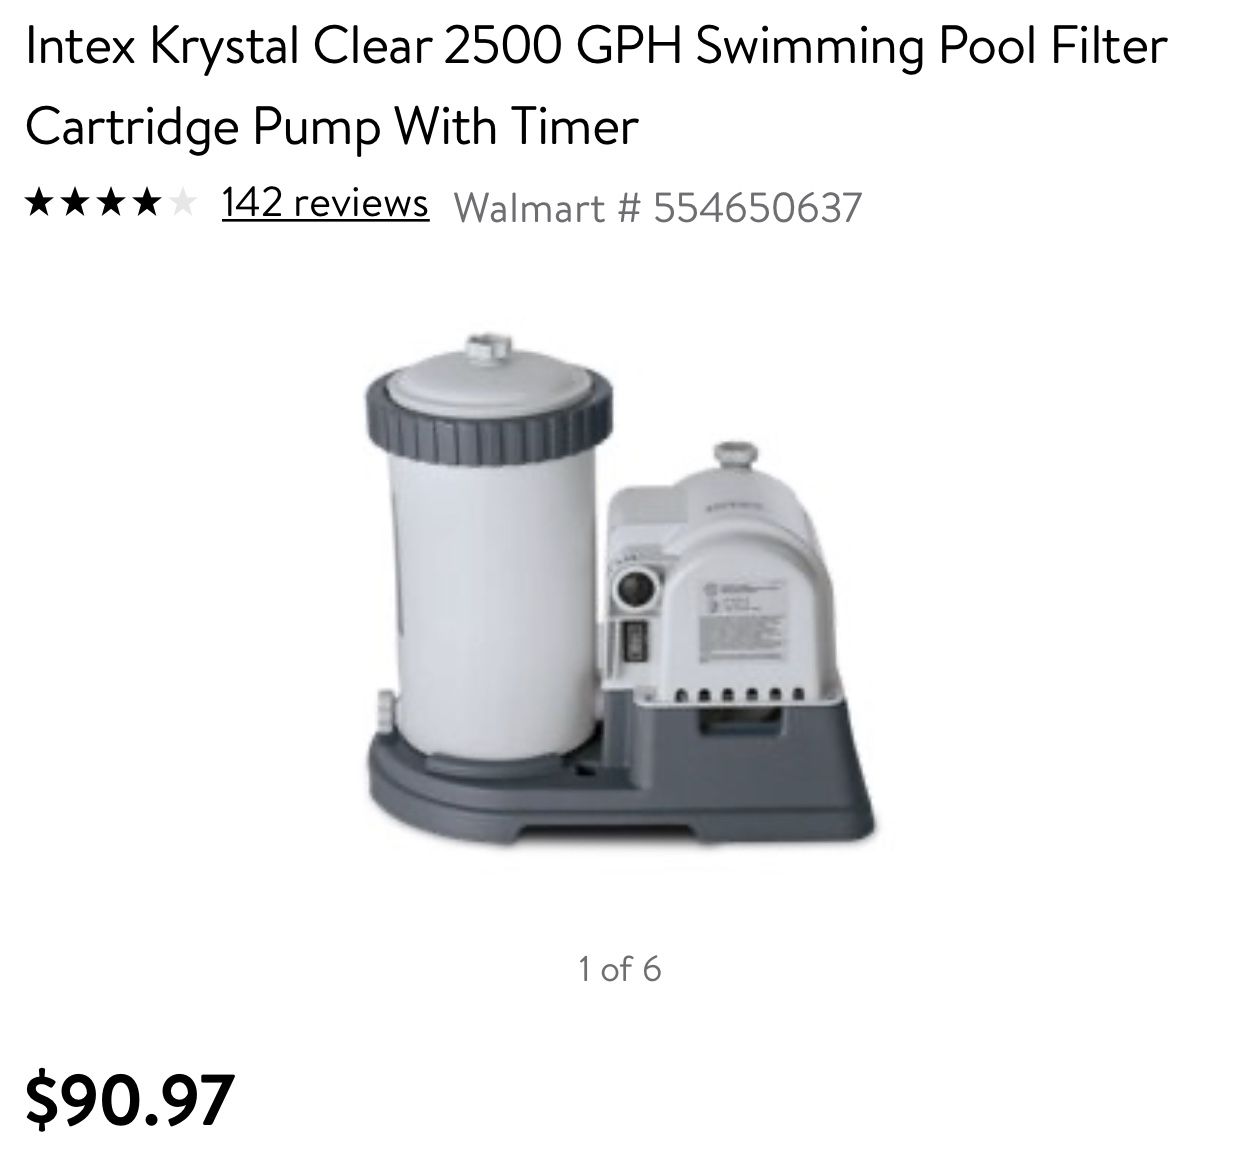 Intex Krystal Clear 2500 GPH Swimming Pool Filter Cartridge Pump With Timer - $90 retail